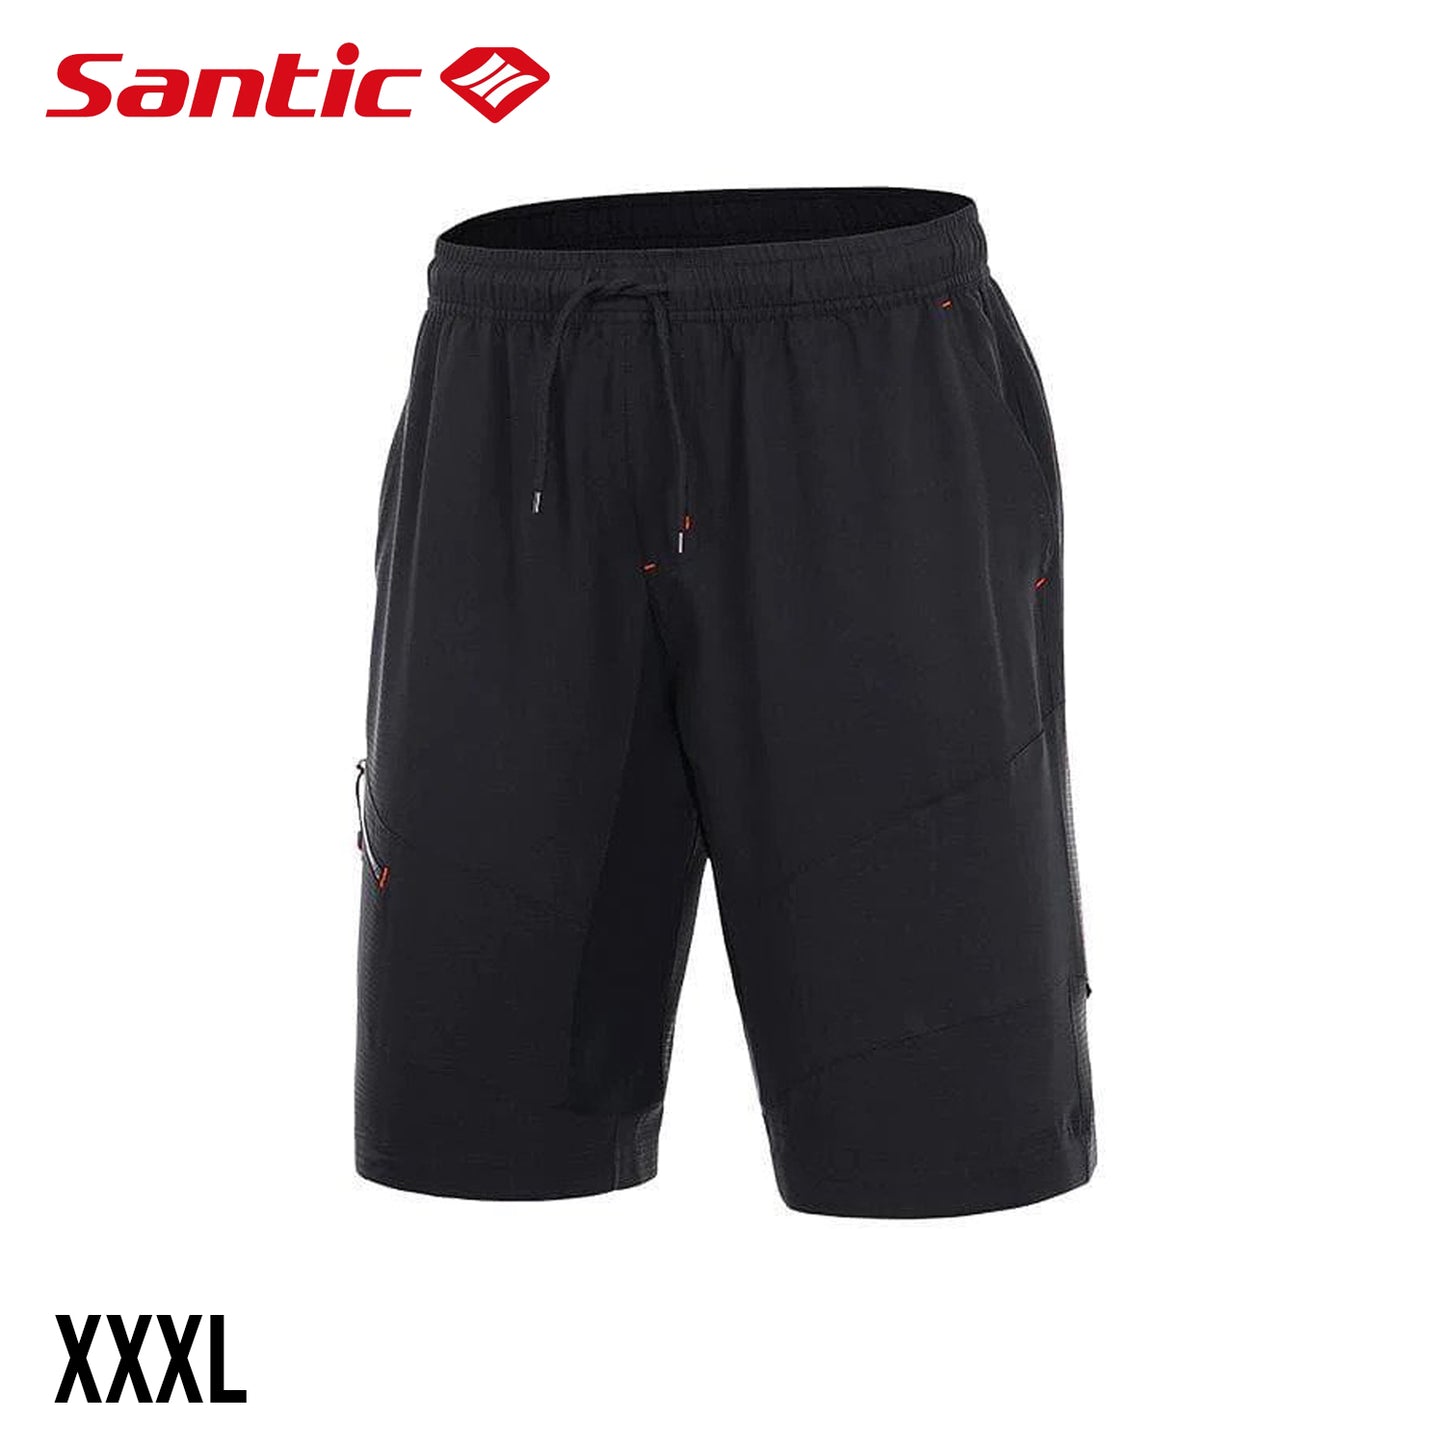 Santic Bagh Ⅱ Men's Spring Summer MTB Bike Short - Black